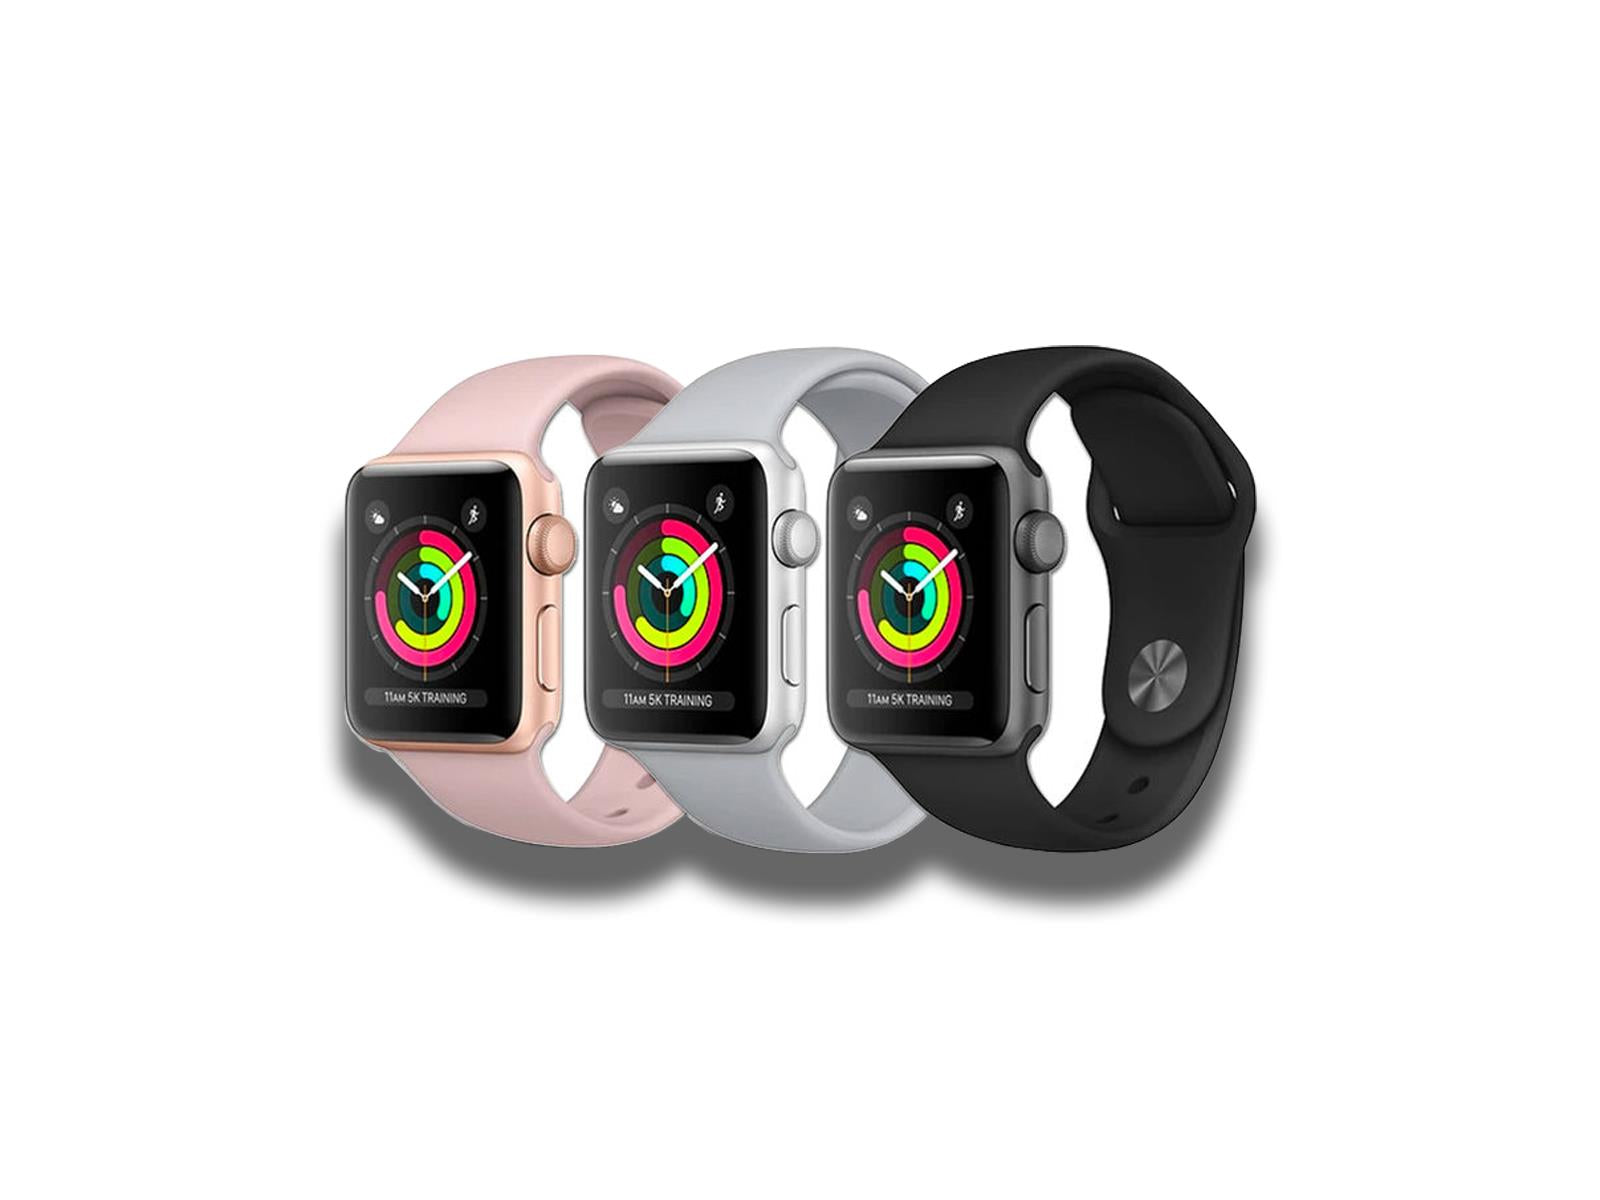 Apple Watch Series 3 Three Colour Variant 